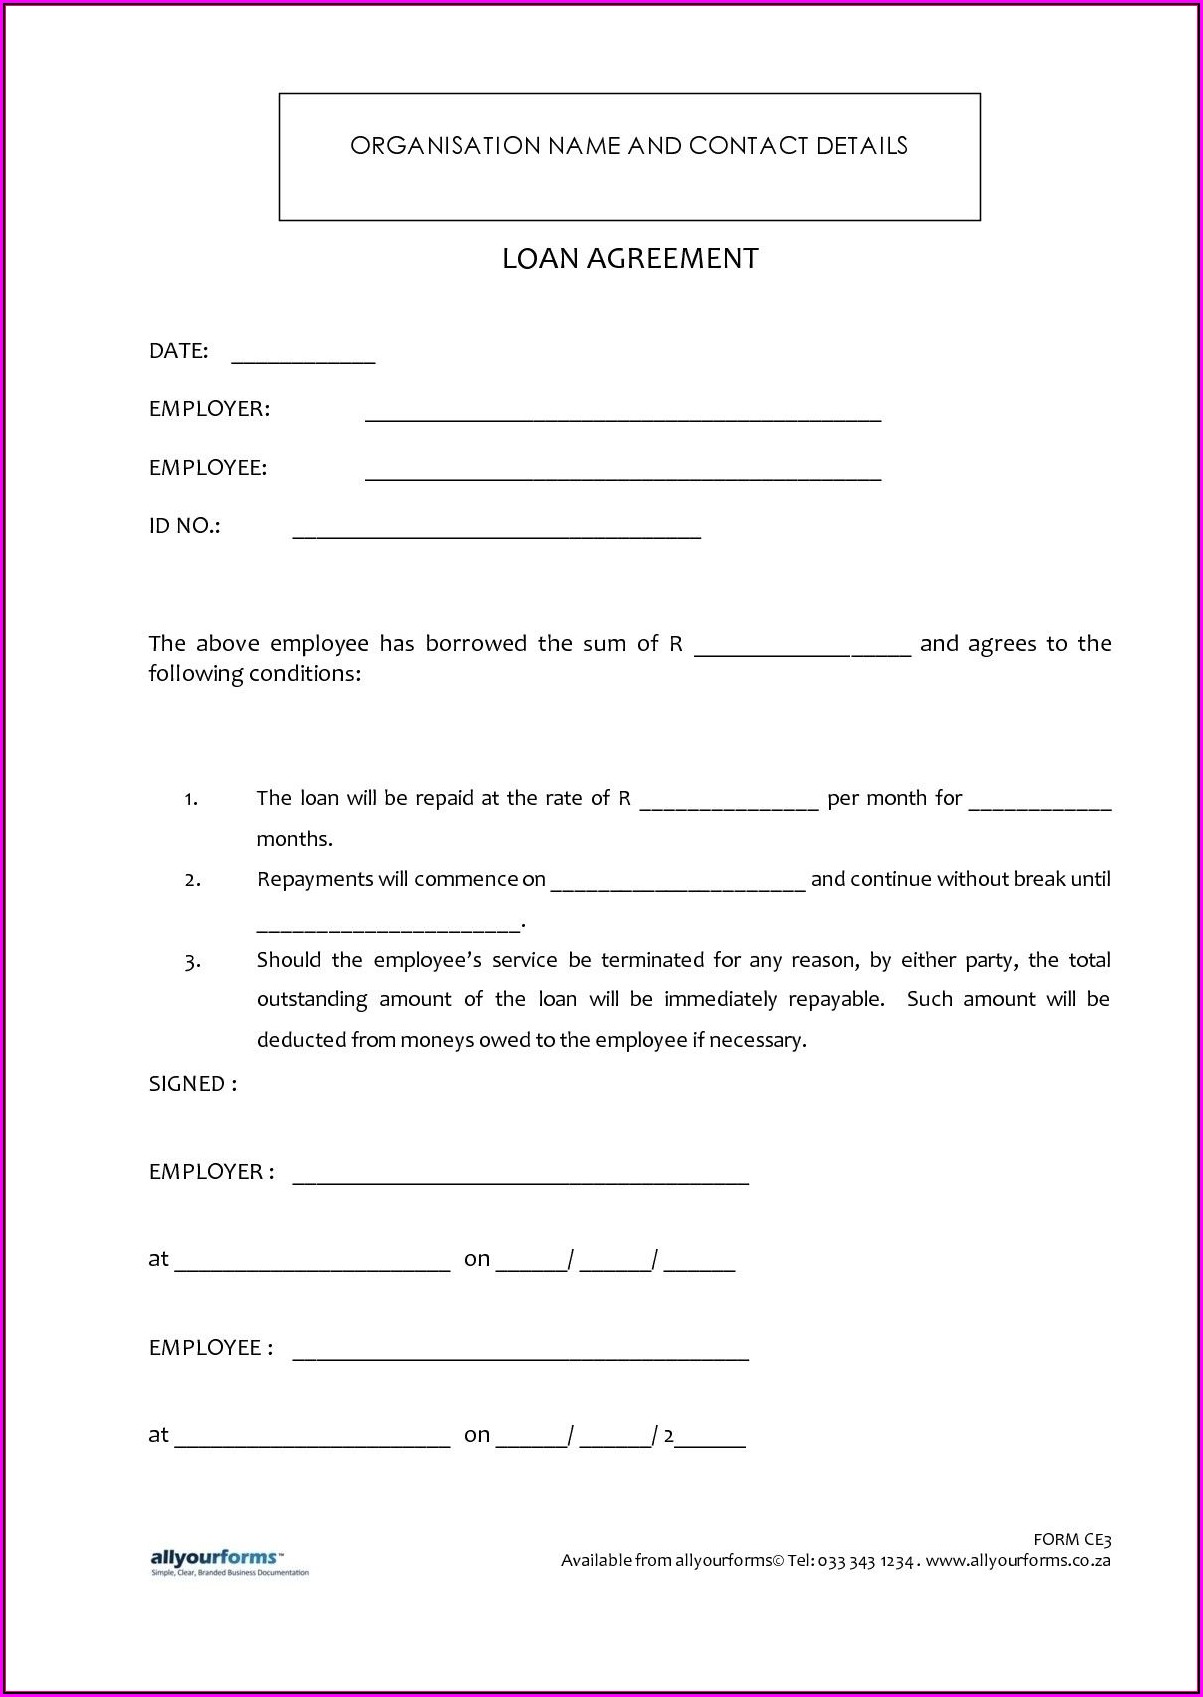 Loan Agreement Sample In Word Format